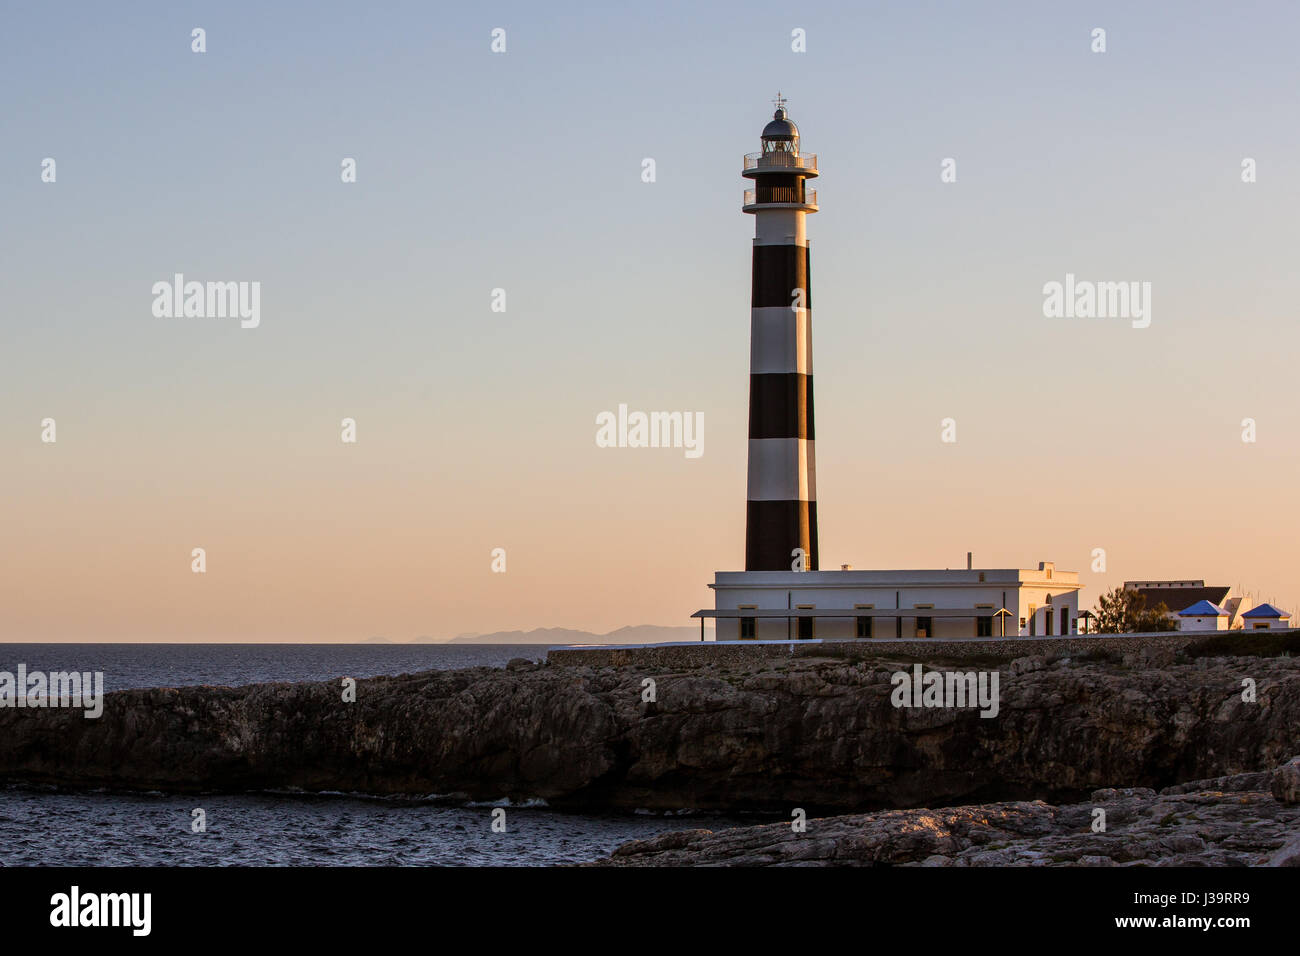 Cap d'Artrutx Lighthouse, Cala'n Bosch, Menorca, Balearics, Spain Stock Photo